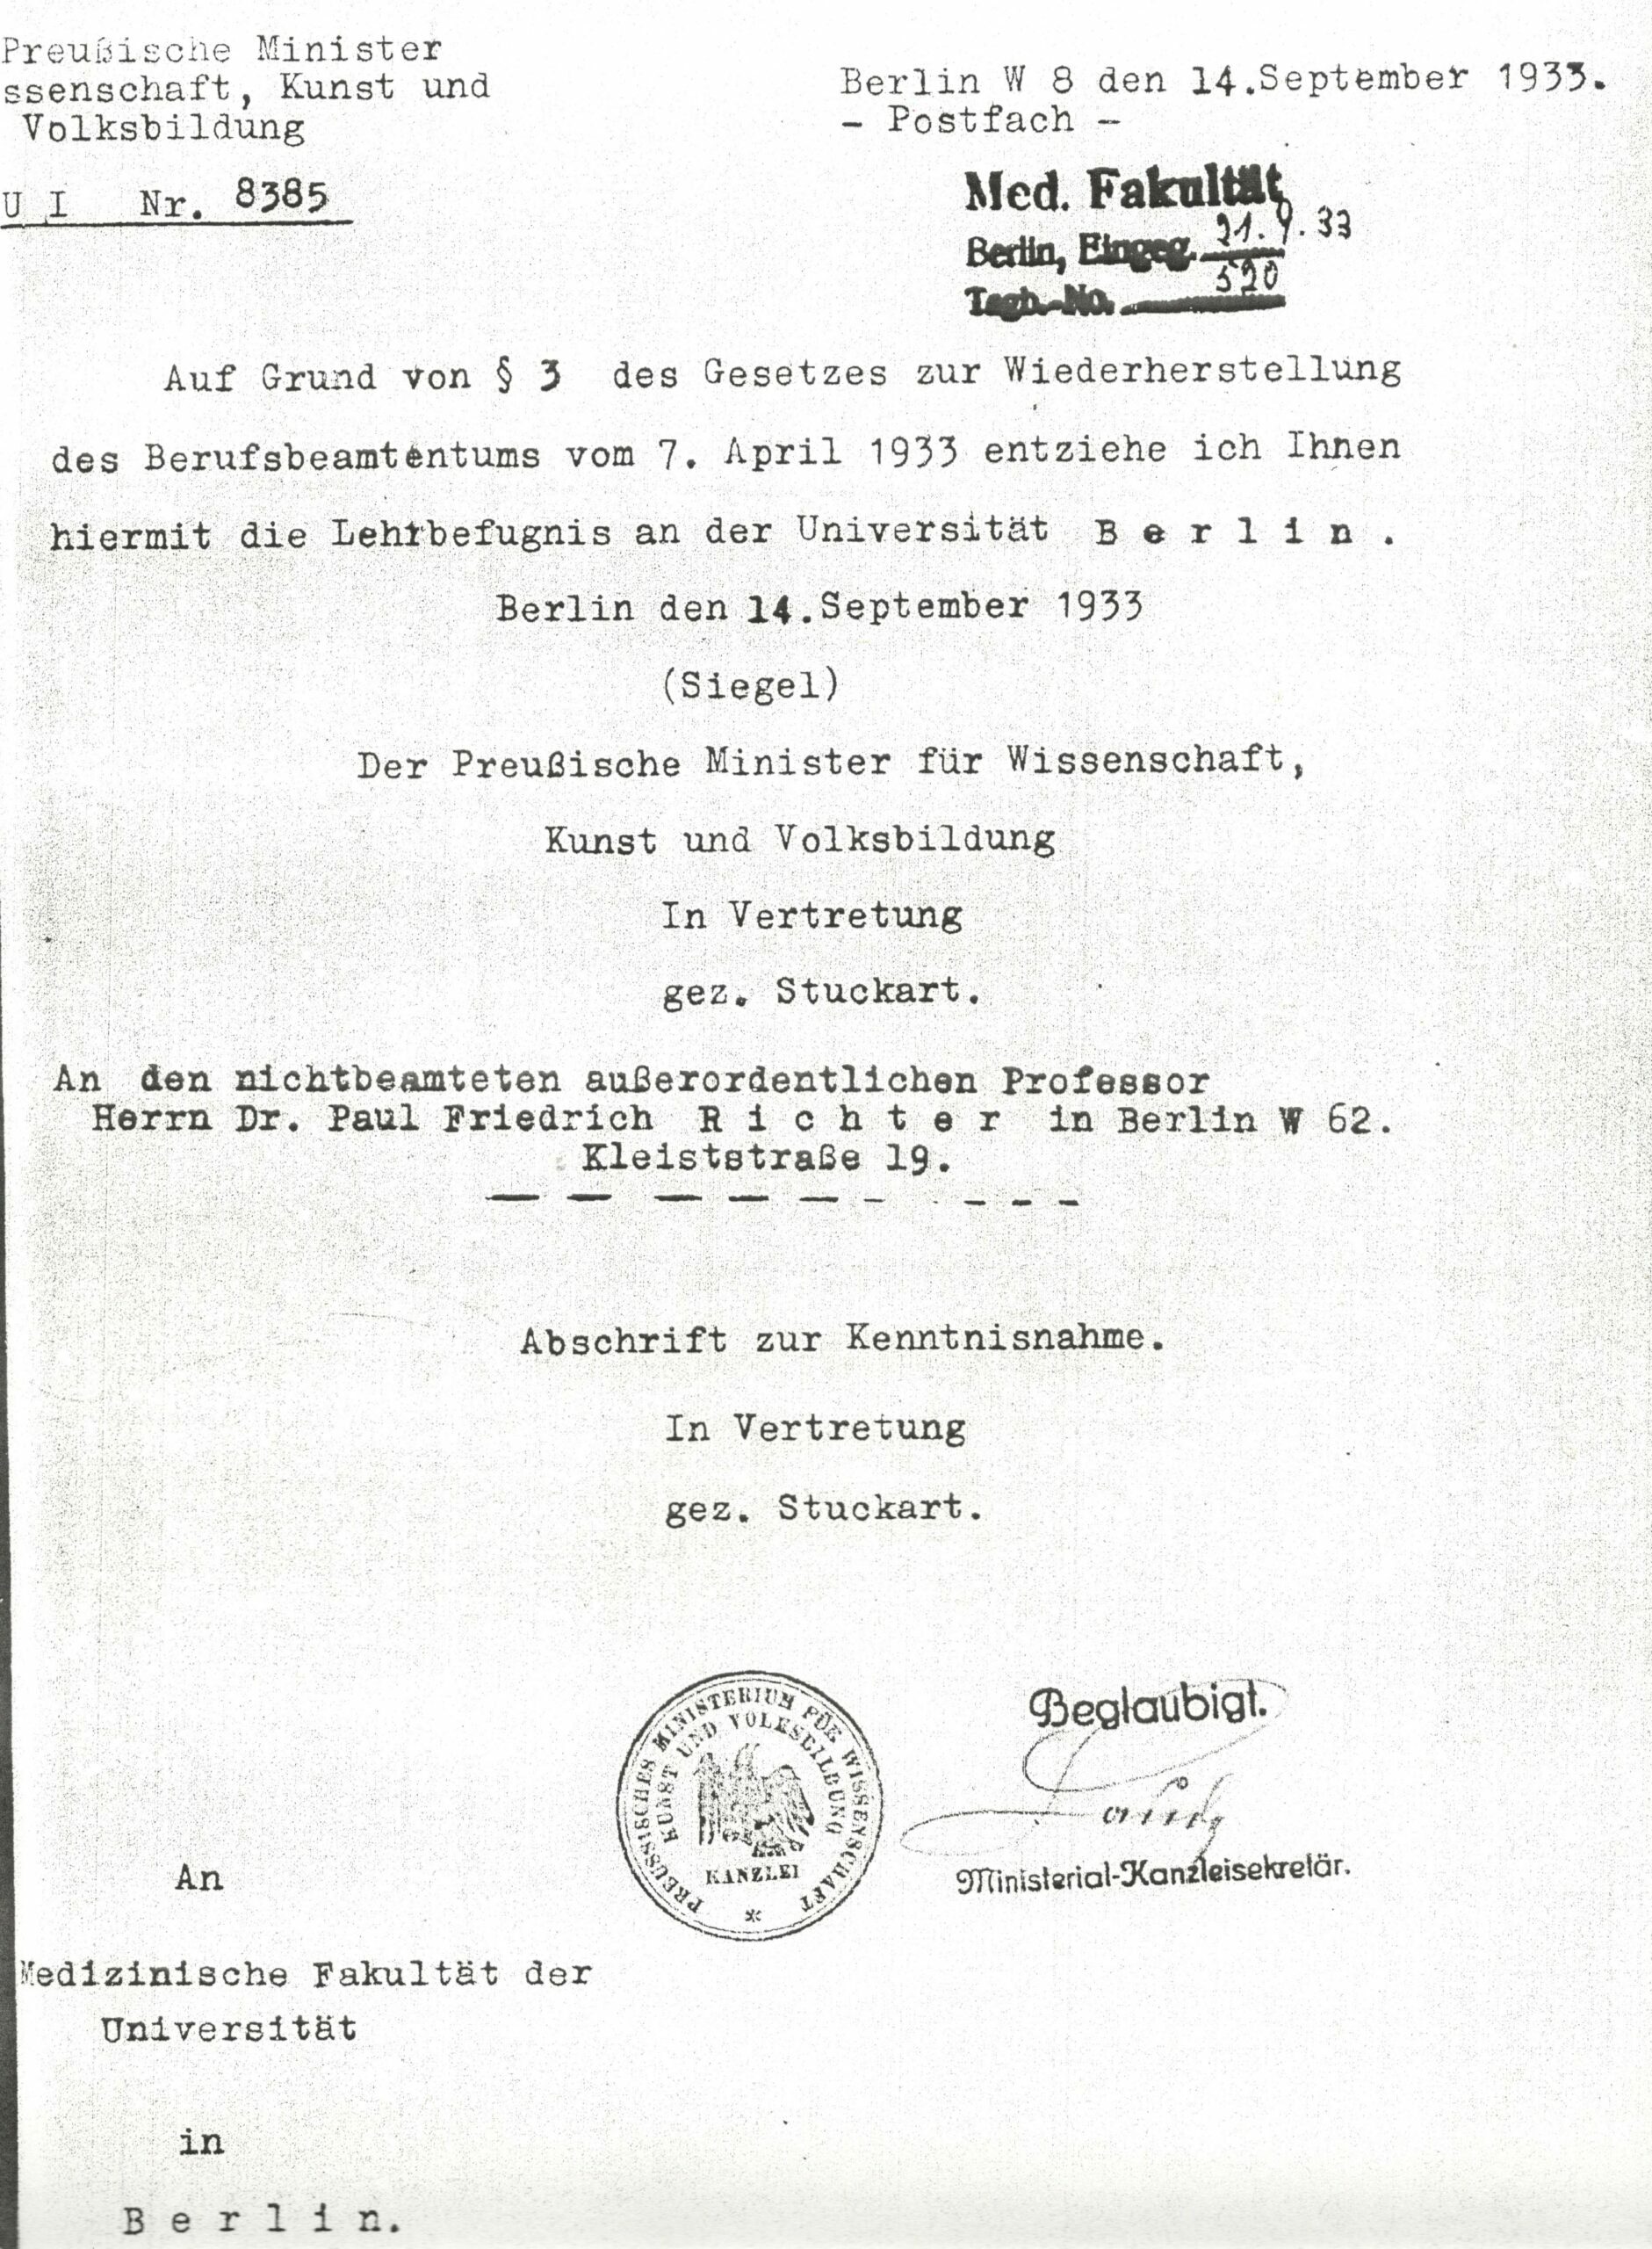 Entzug der Lehrbefugnis 1933, <br> Quelle: Archiv Humboldt Universität Berlin, Med. Fak. 1478, Bl. 129